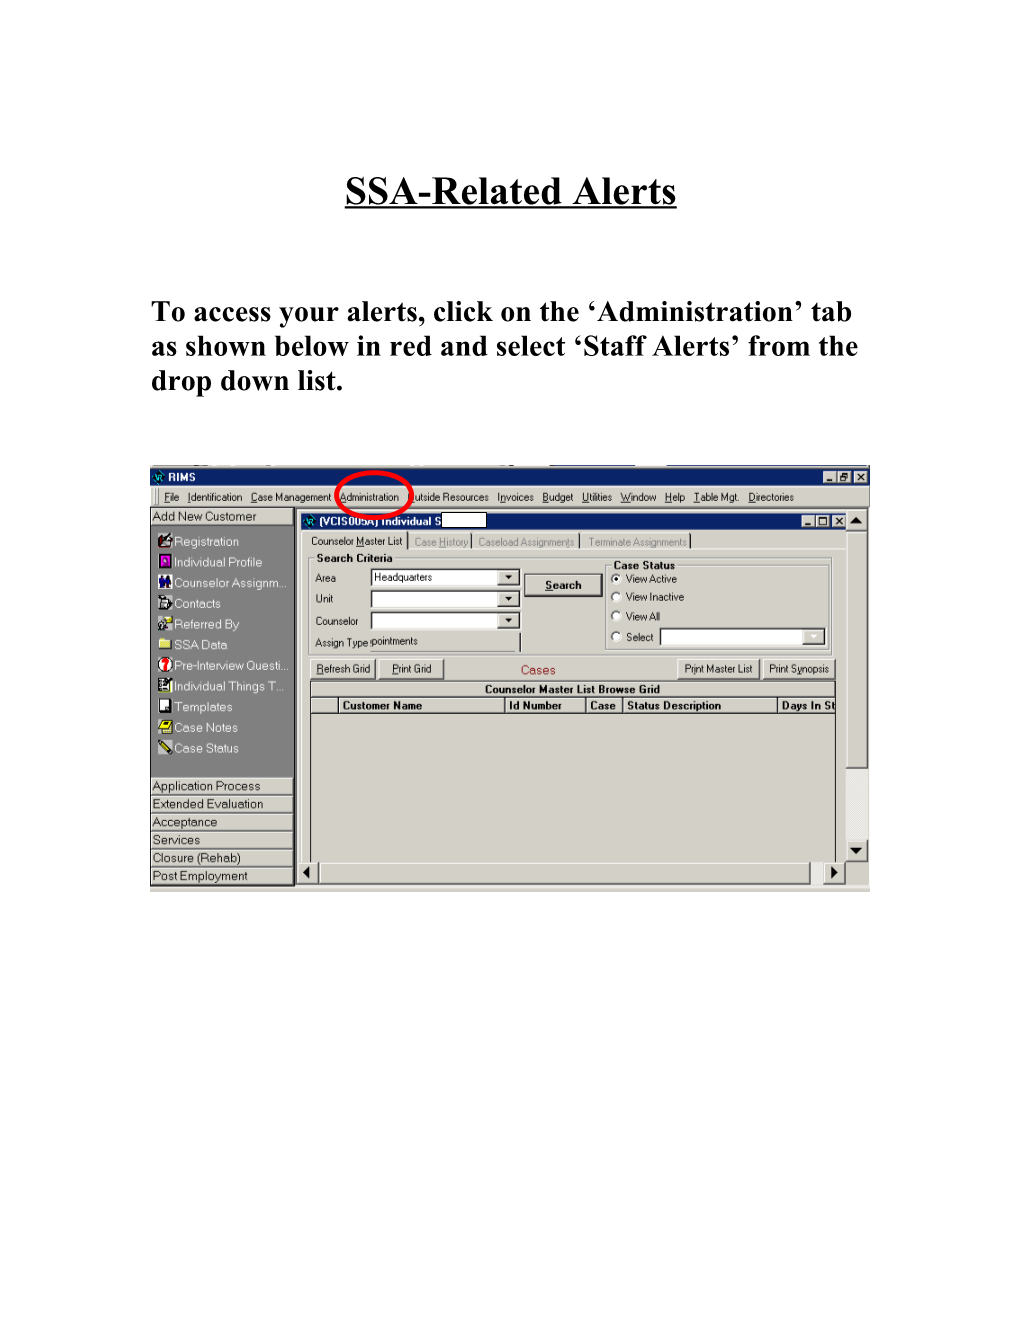 SSA Alert Instructions